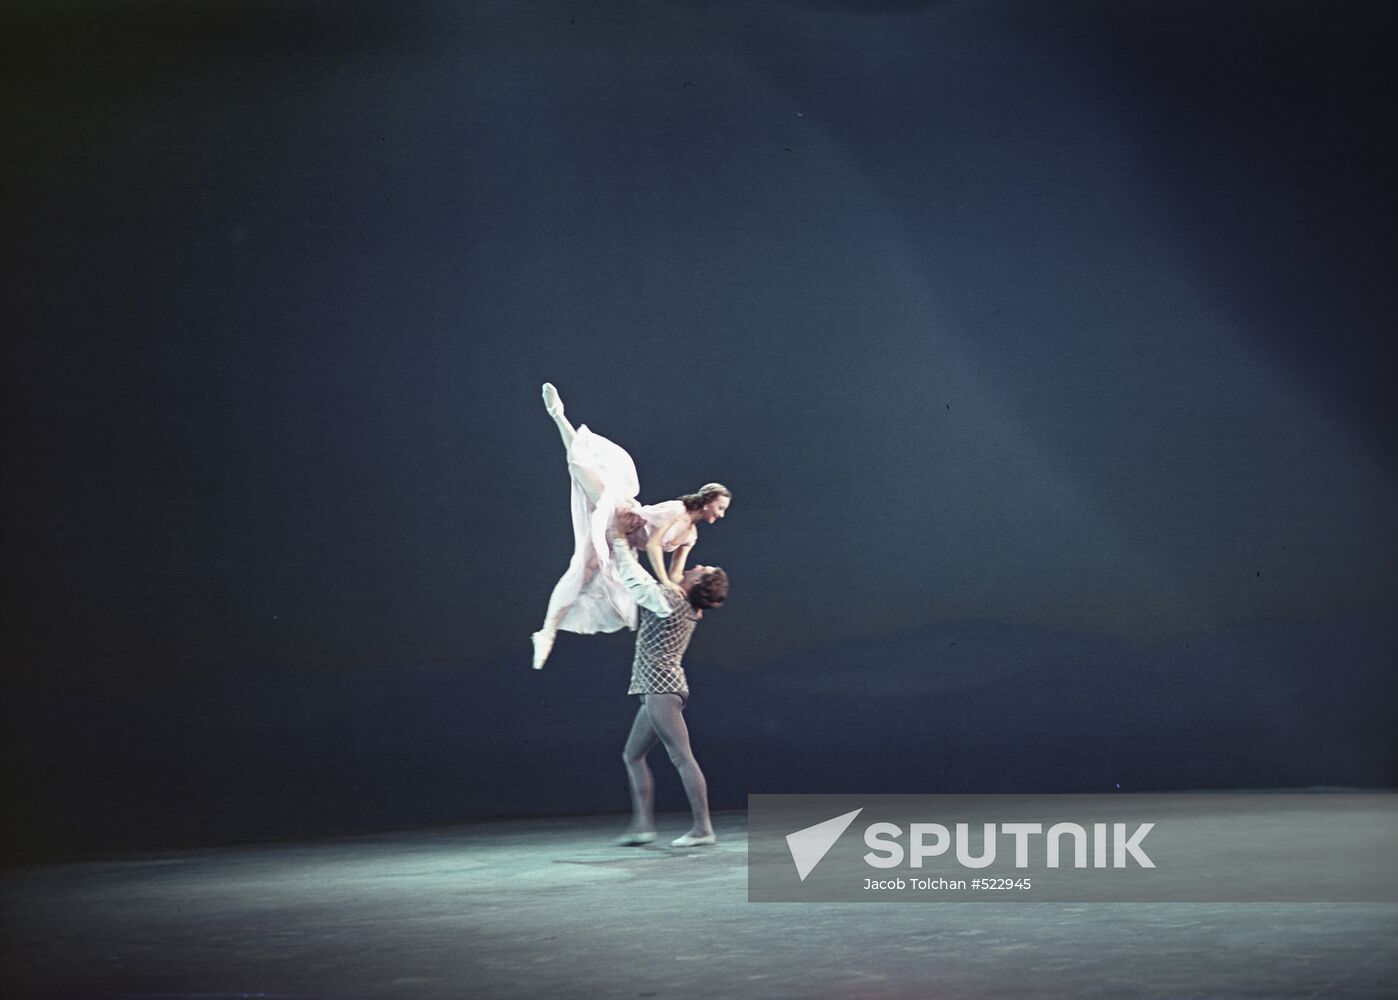 Ballet dancers Galina Ulanova and Yury Zhdanov